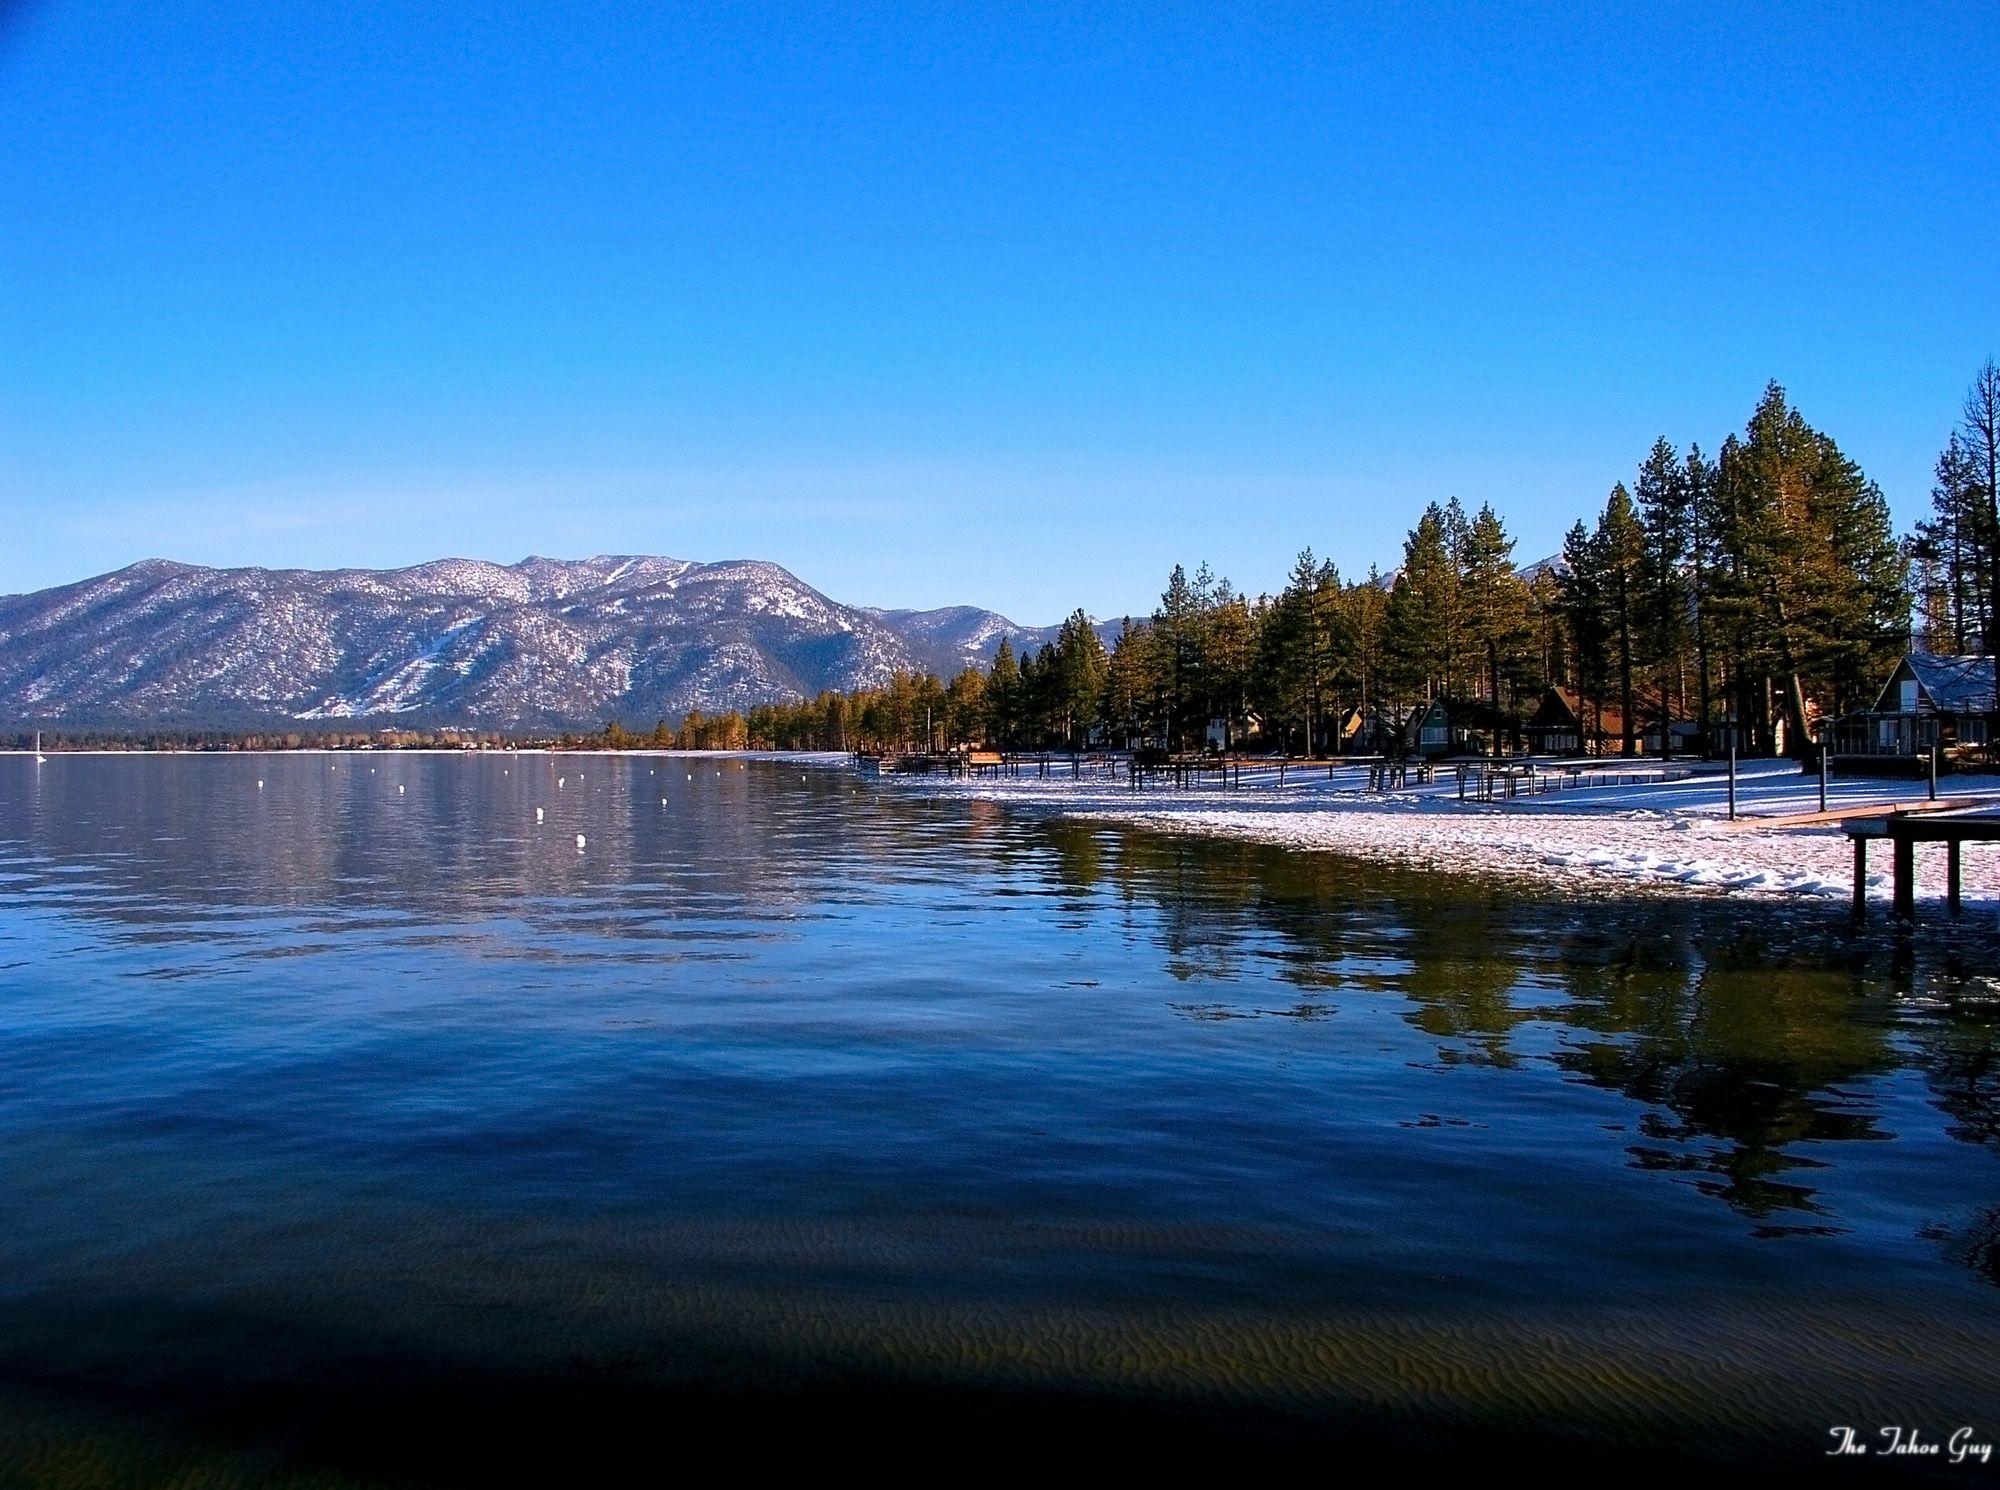 Lake Tahoe Winter Activities